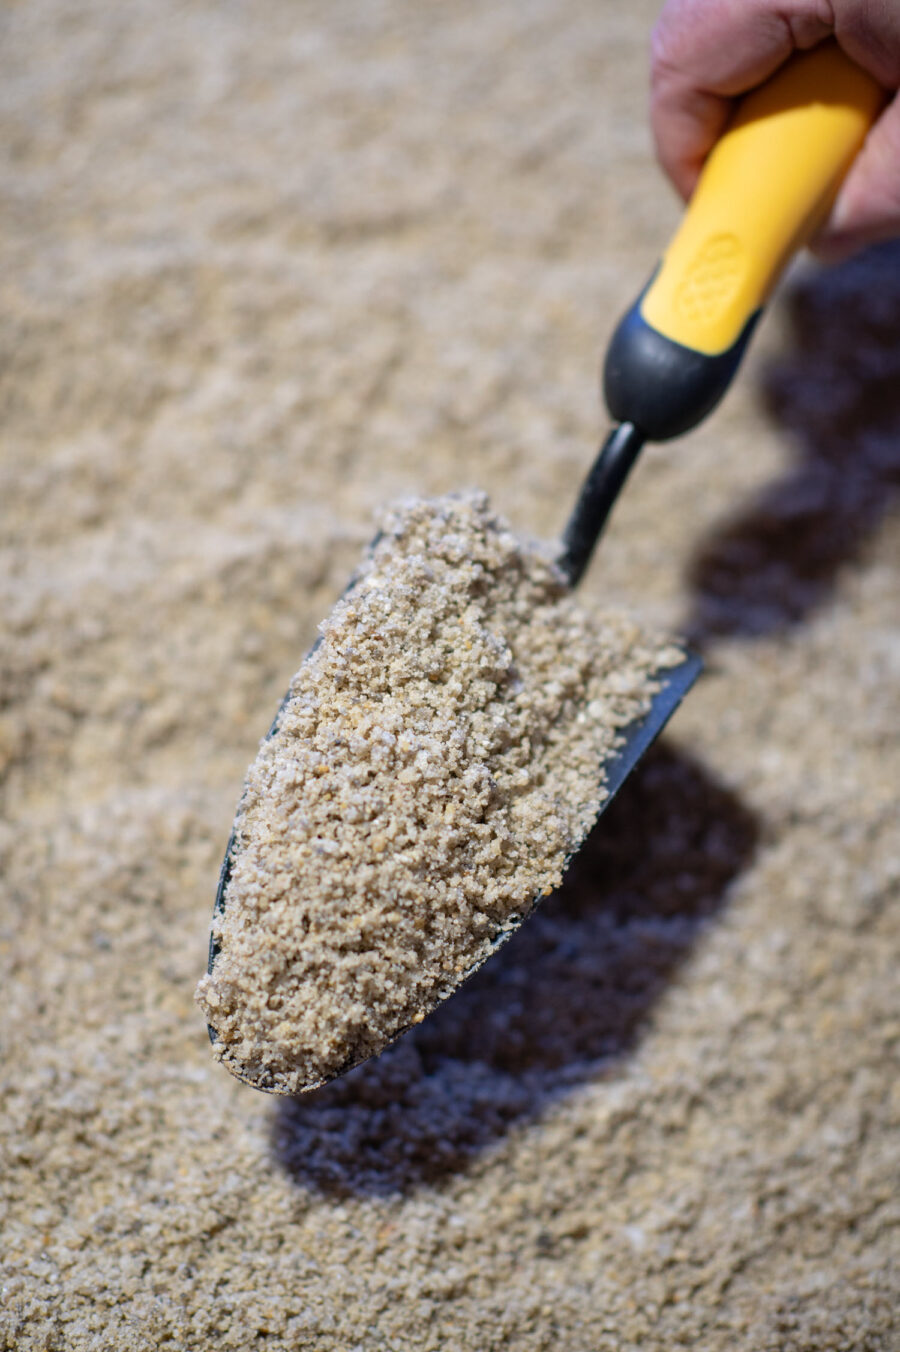 Buttrose Sharp propagating sand